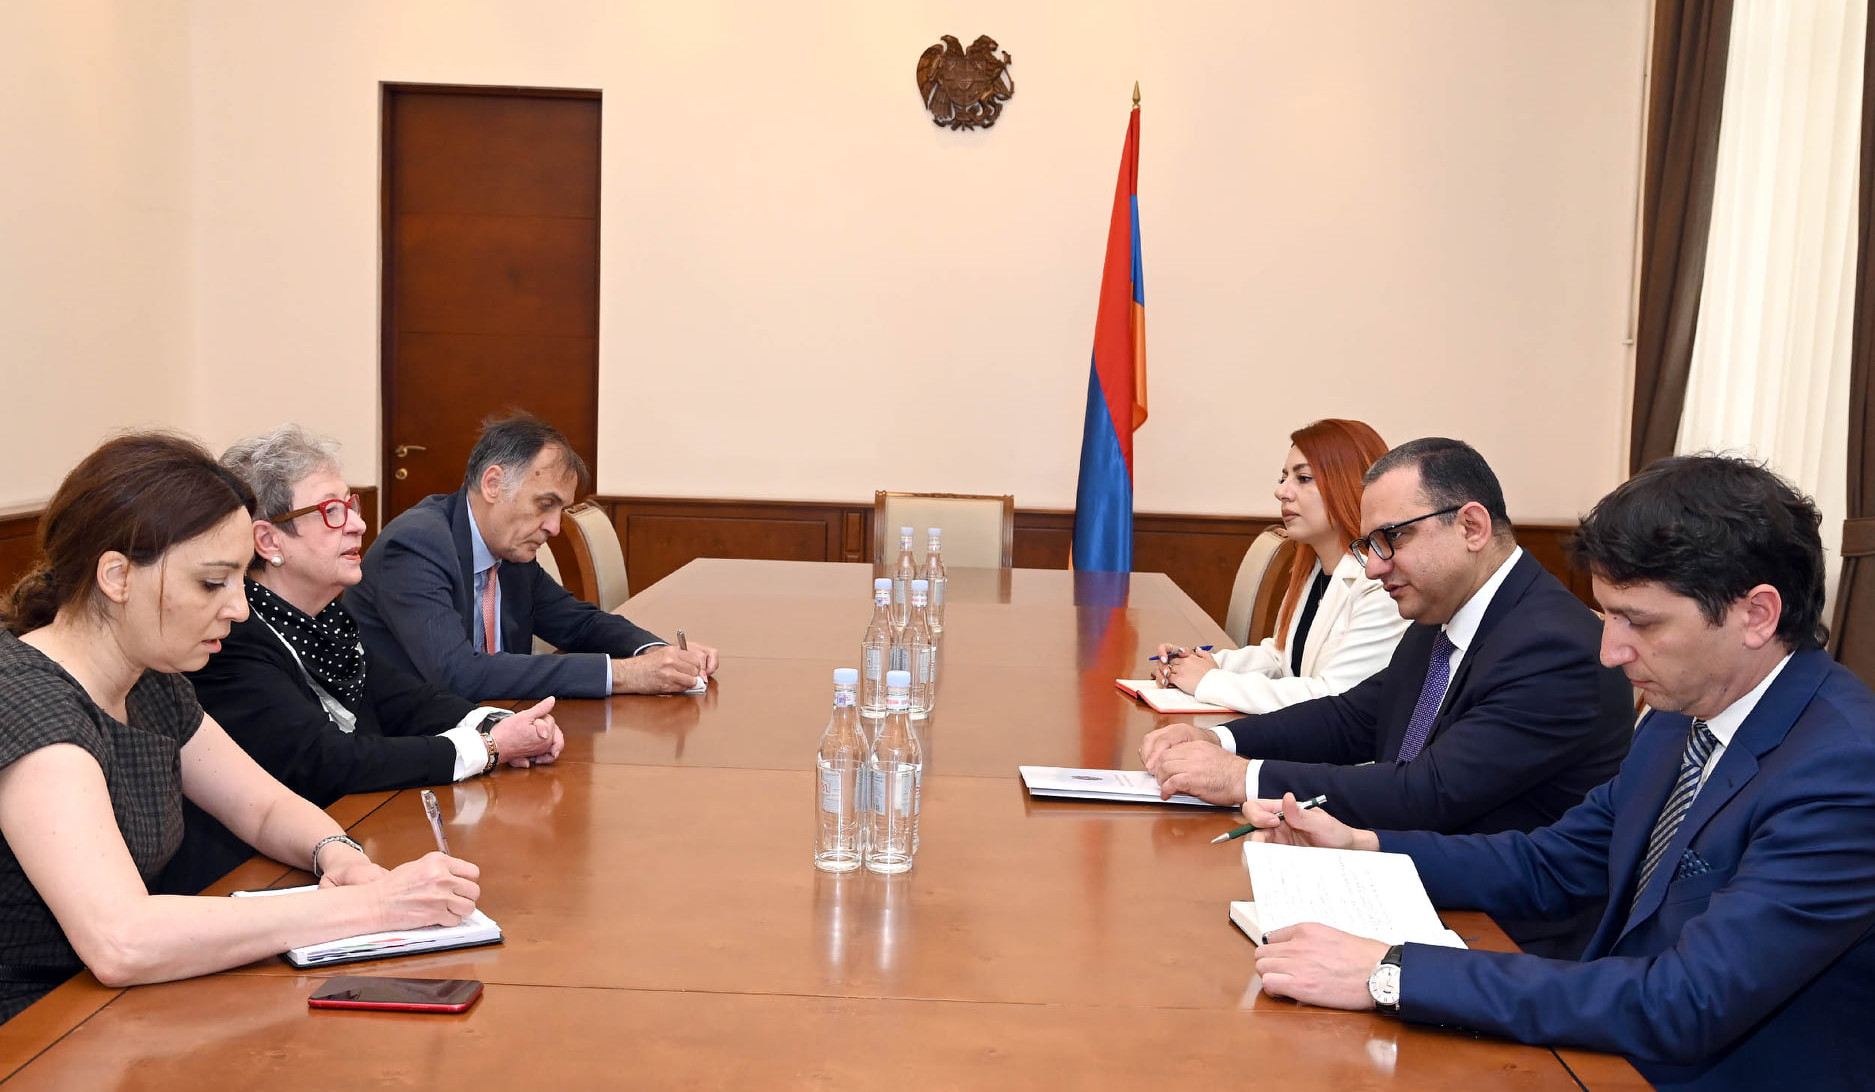 EU ready to continue providing support to Armenian Government: Andrea Wiktorin